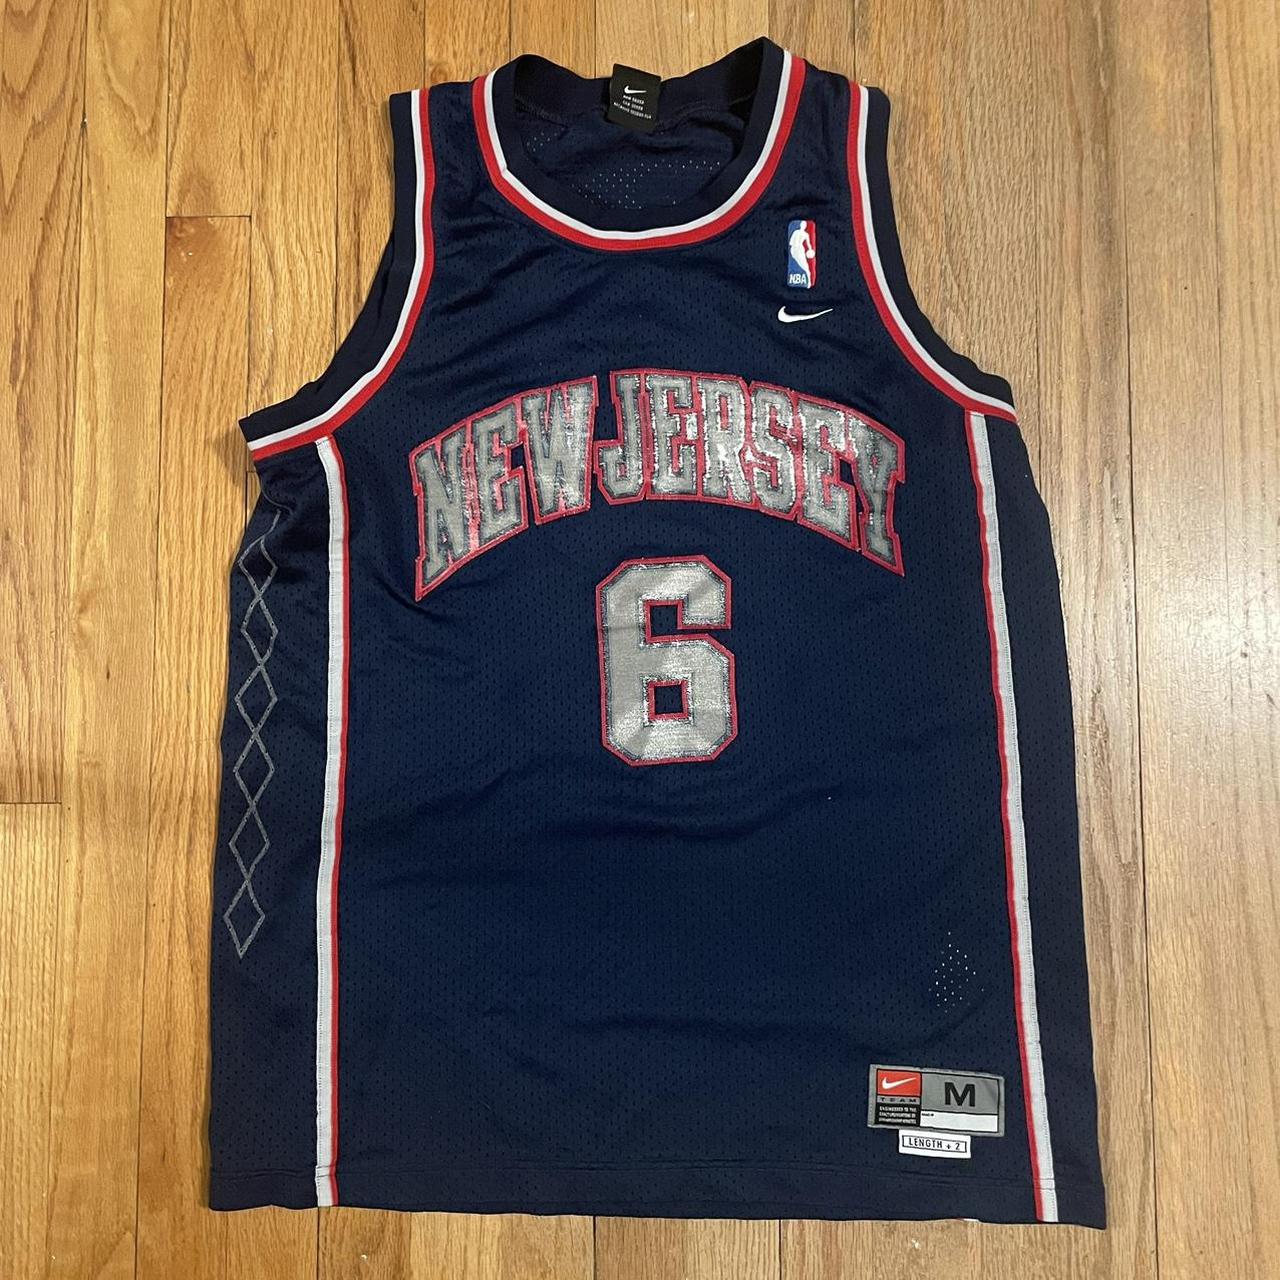 Vintage New Jersey Nets Kenyon Martin Basketball Jersey